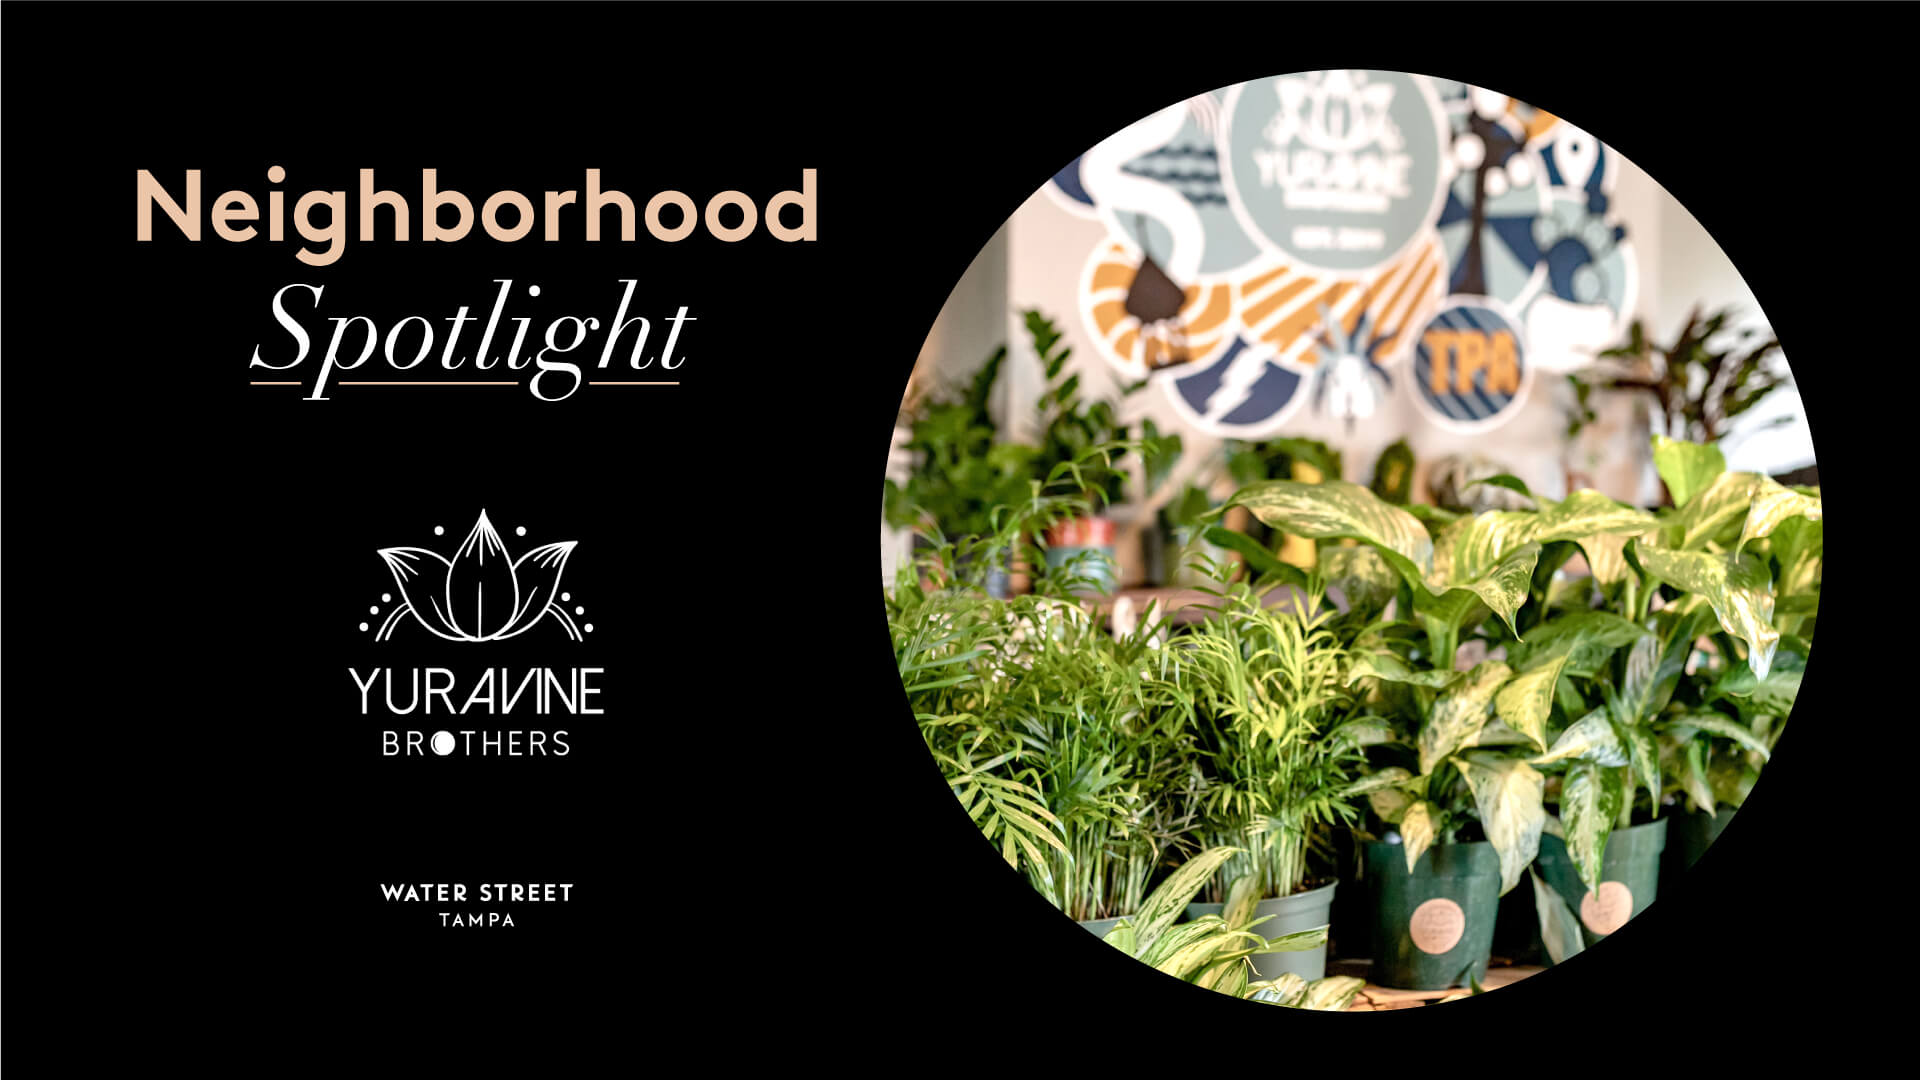 Yura Vine Brothers graphics for Neighborhood Spotlight event